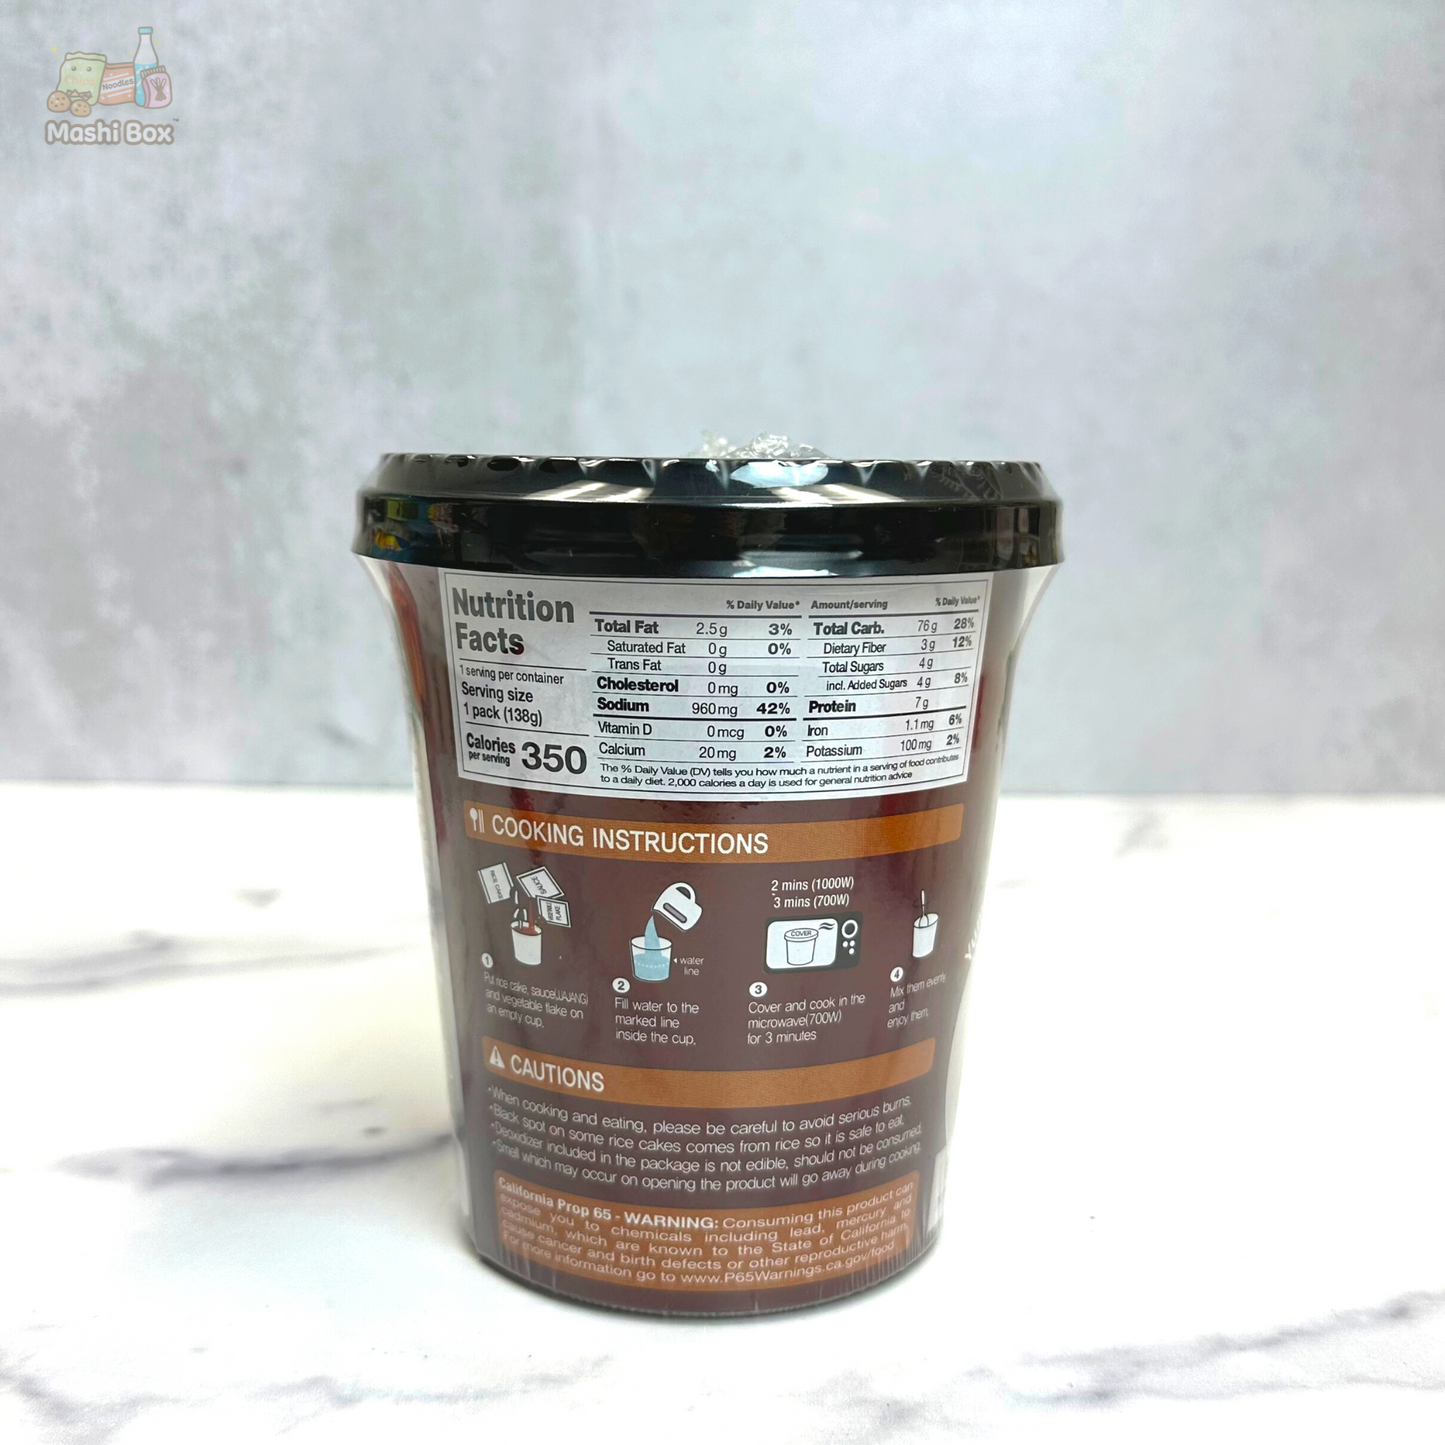 K-Quick Tteokbokki Instant Rice Cake Cup -- Original, Jjajang, Hot Spicy